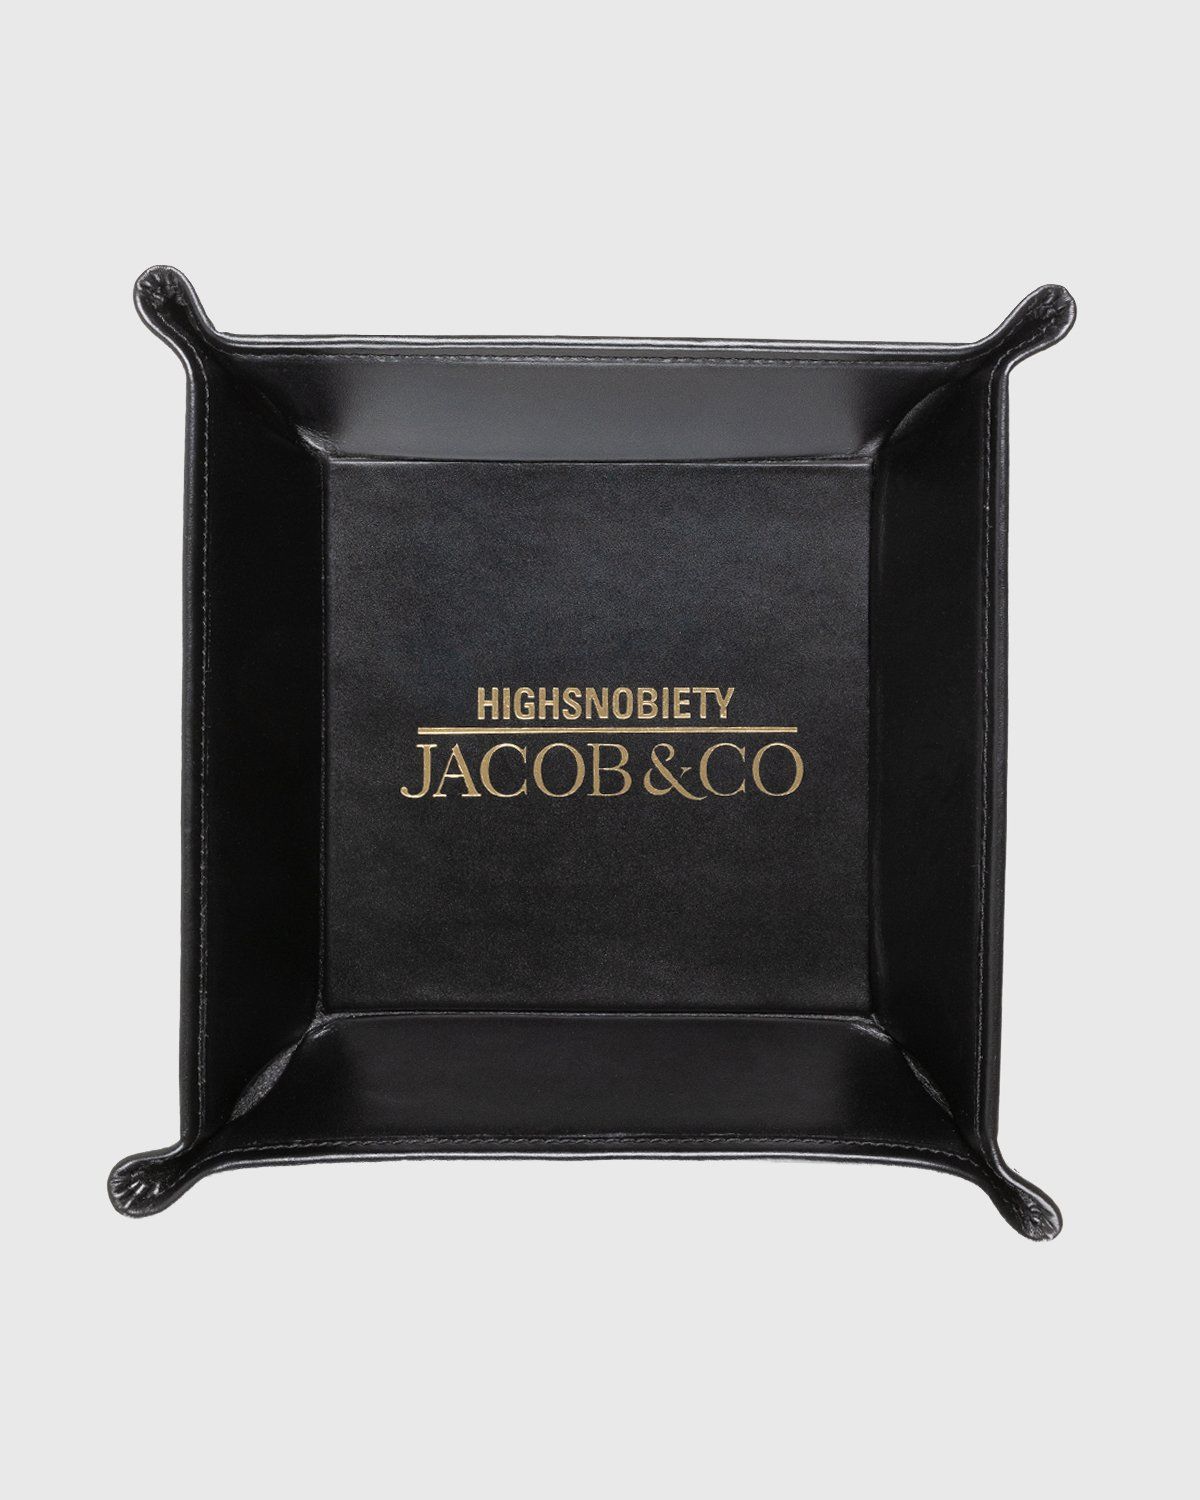 Jacob & Co. x Highsnobiety – Leather Key Tray Black - Image 1